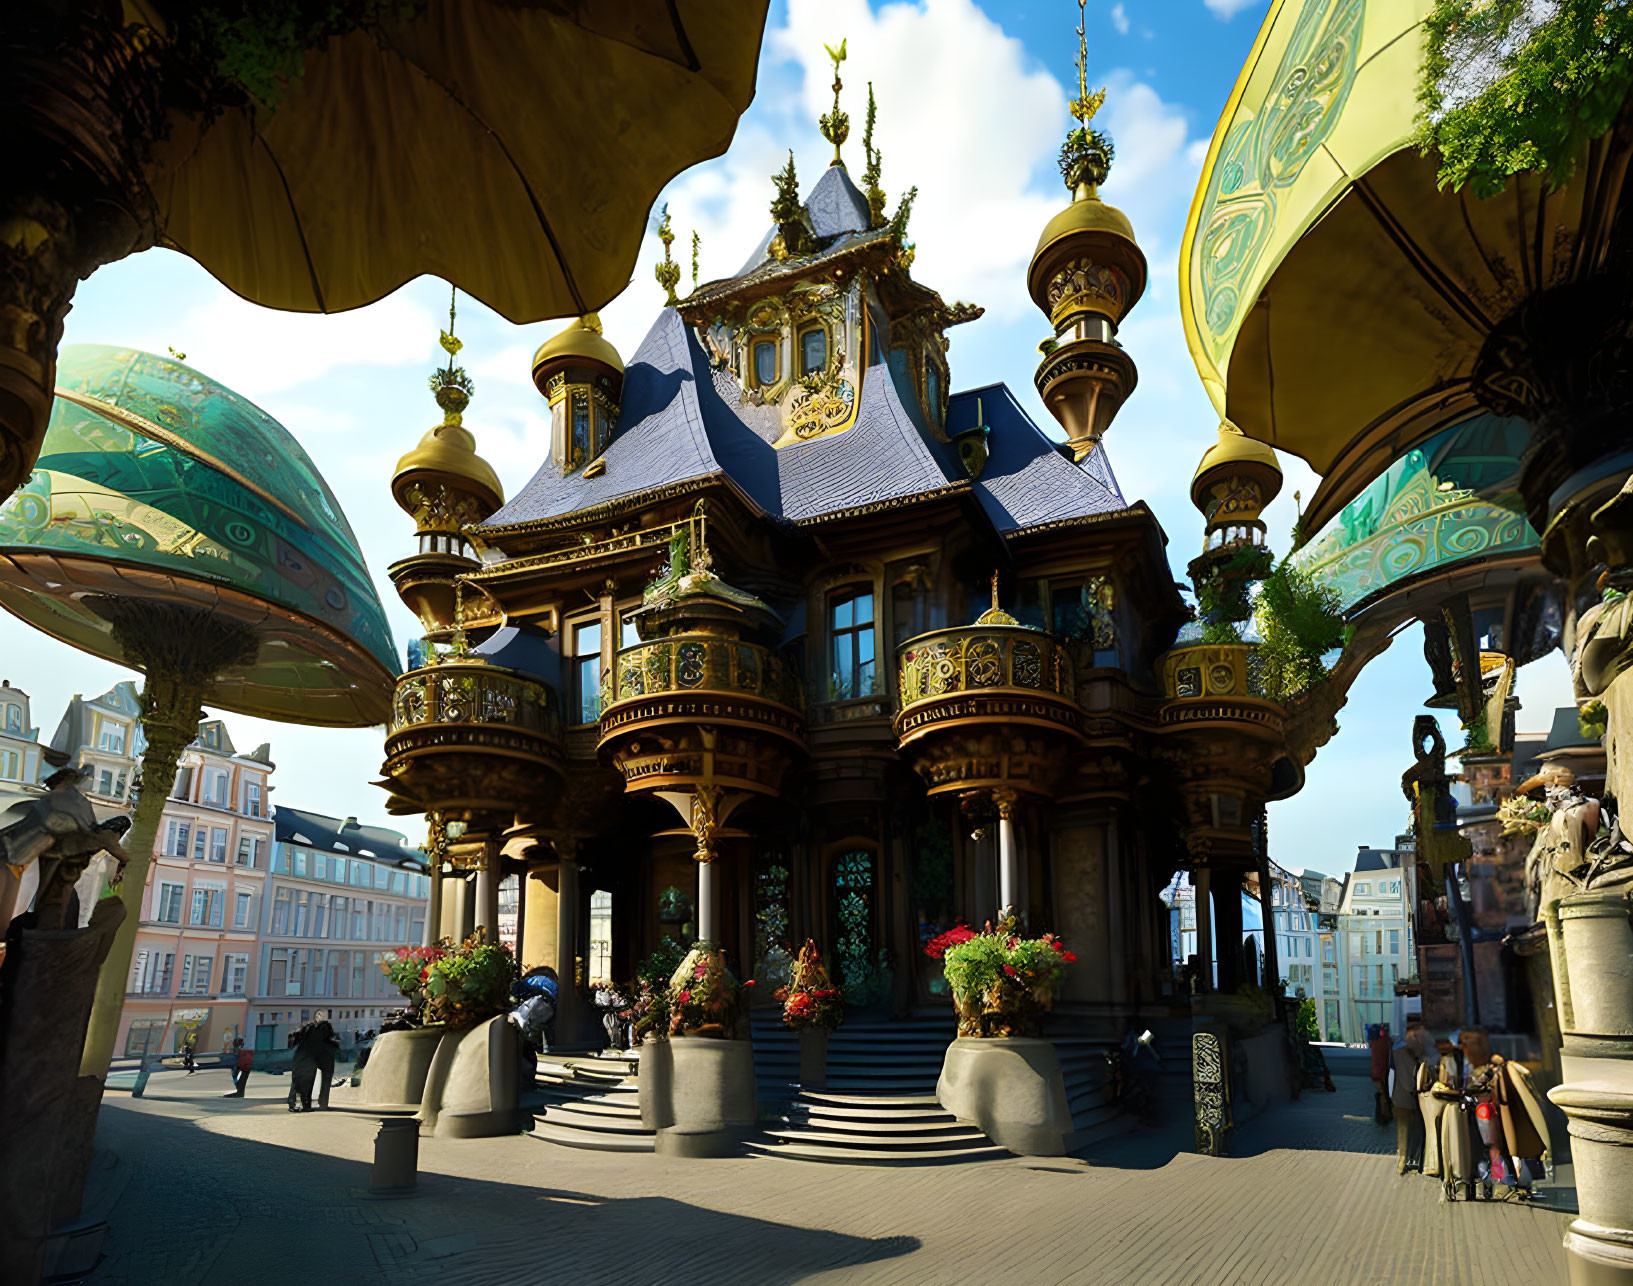 Fantasy-style golden buildings under large mushrooms in cobblestone plaza